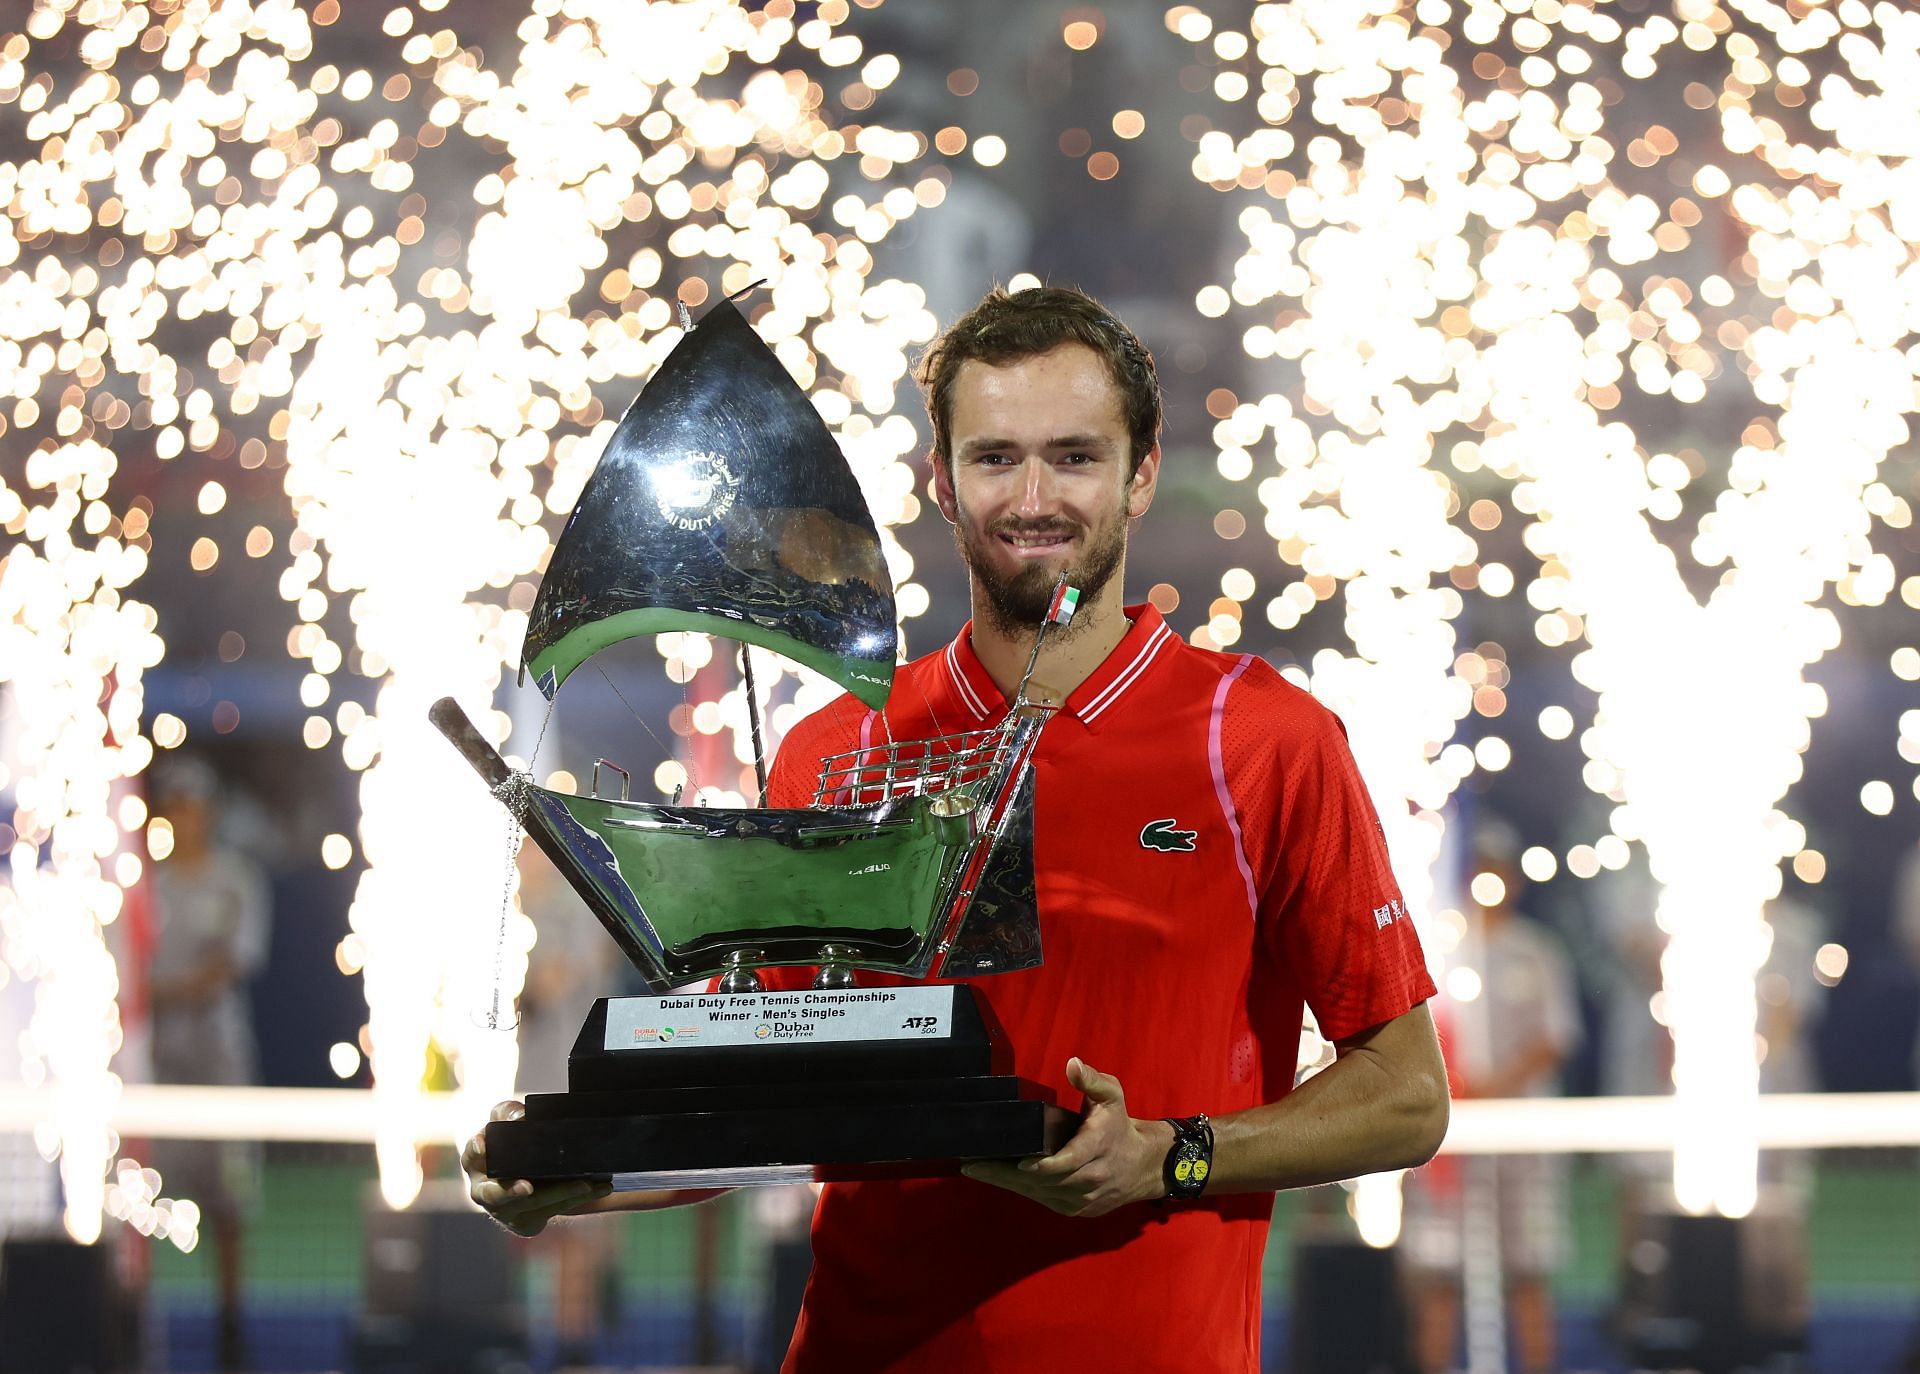 Daniil Medvedev won the Dubai Tennis Championships